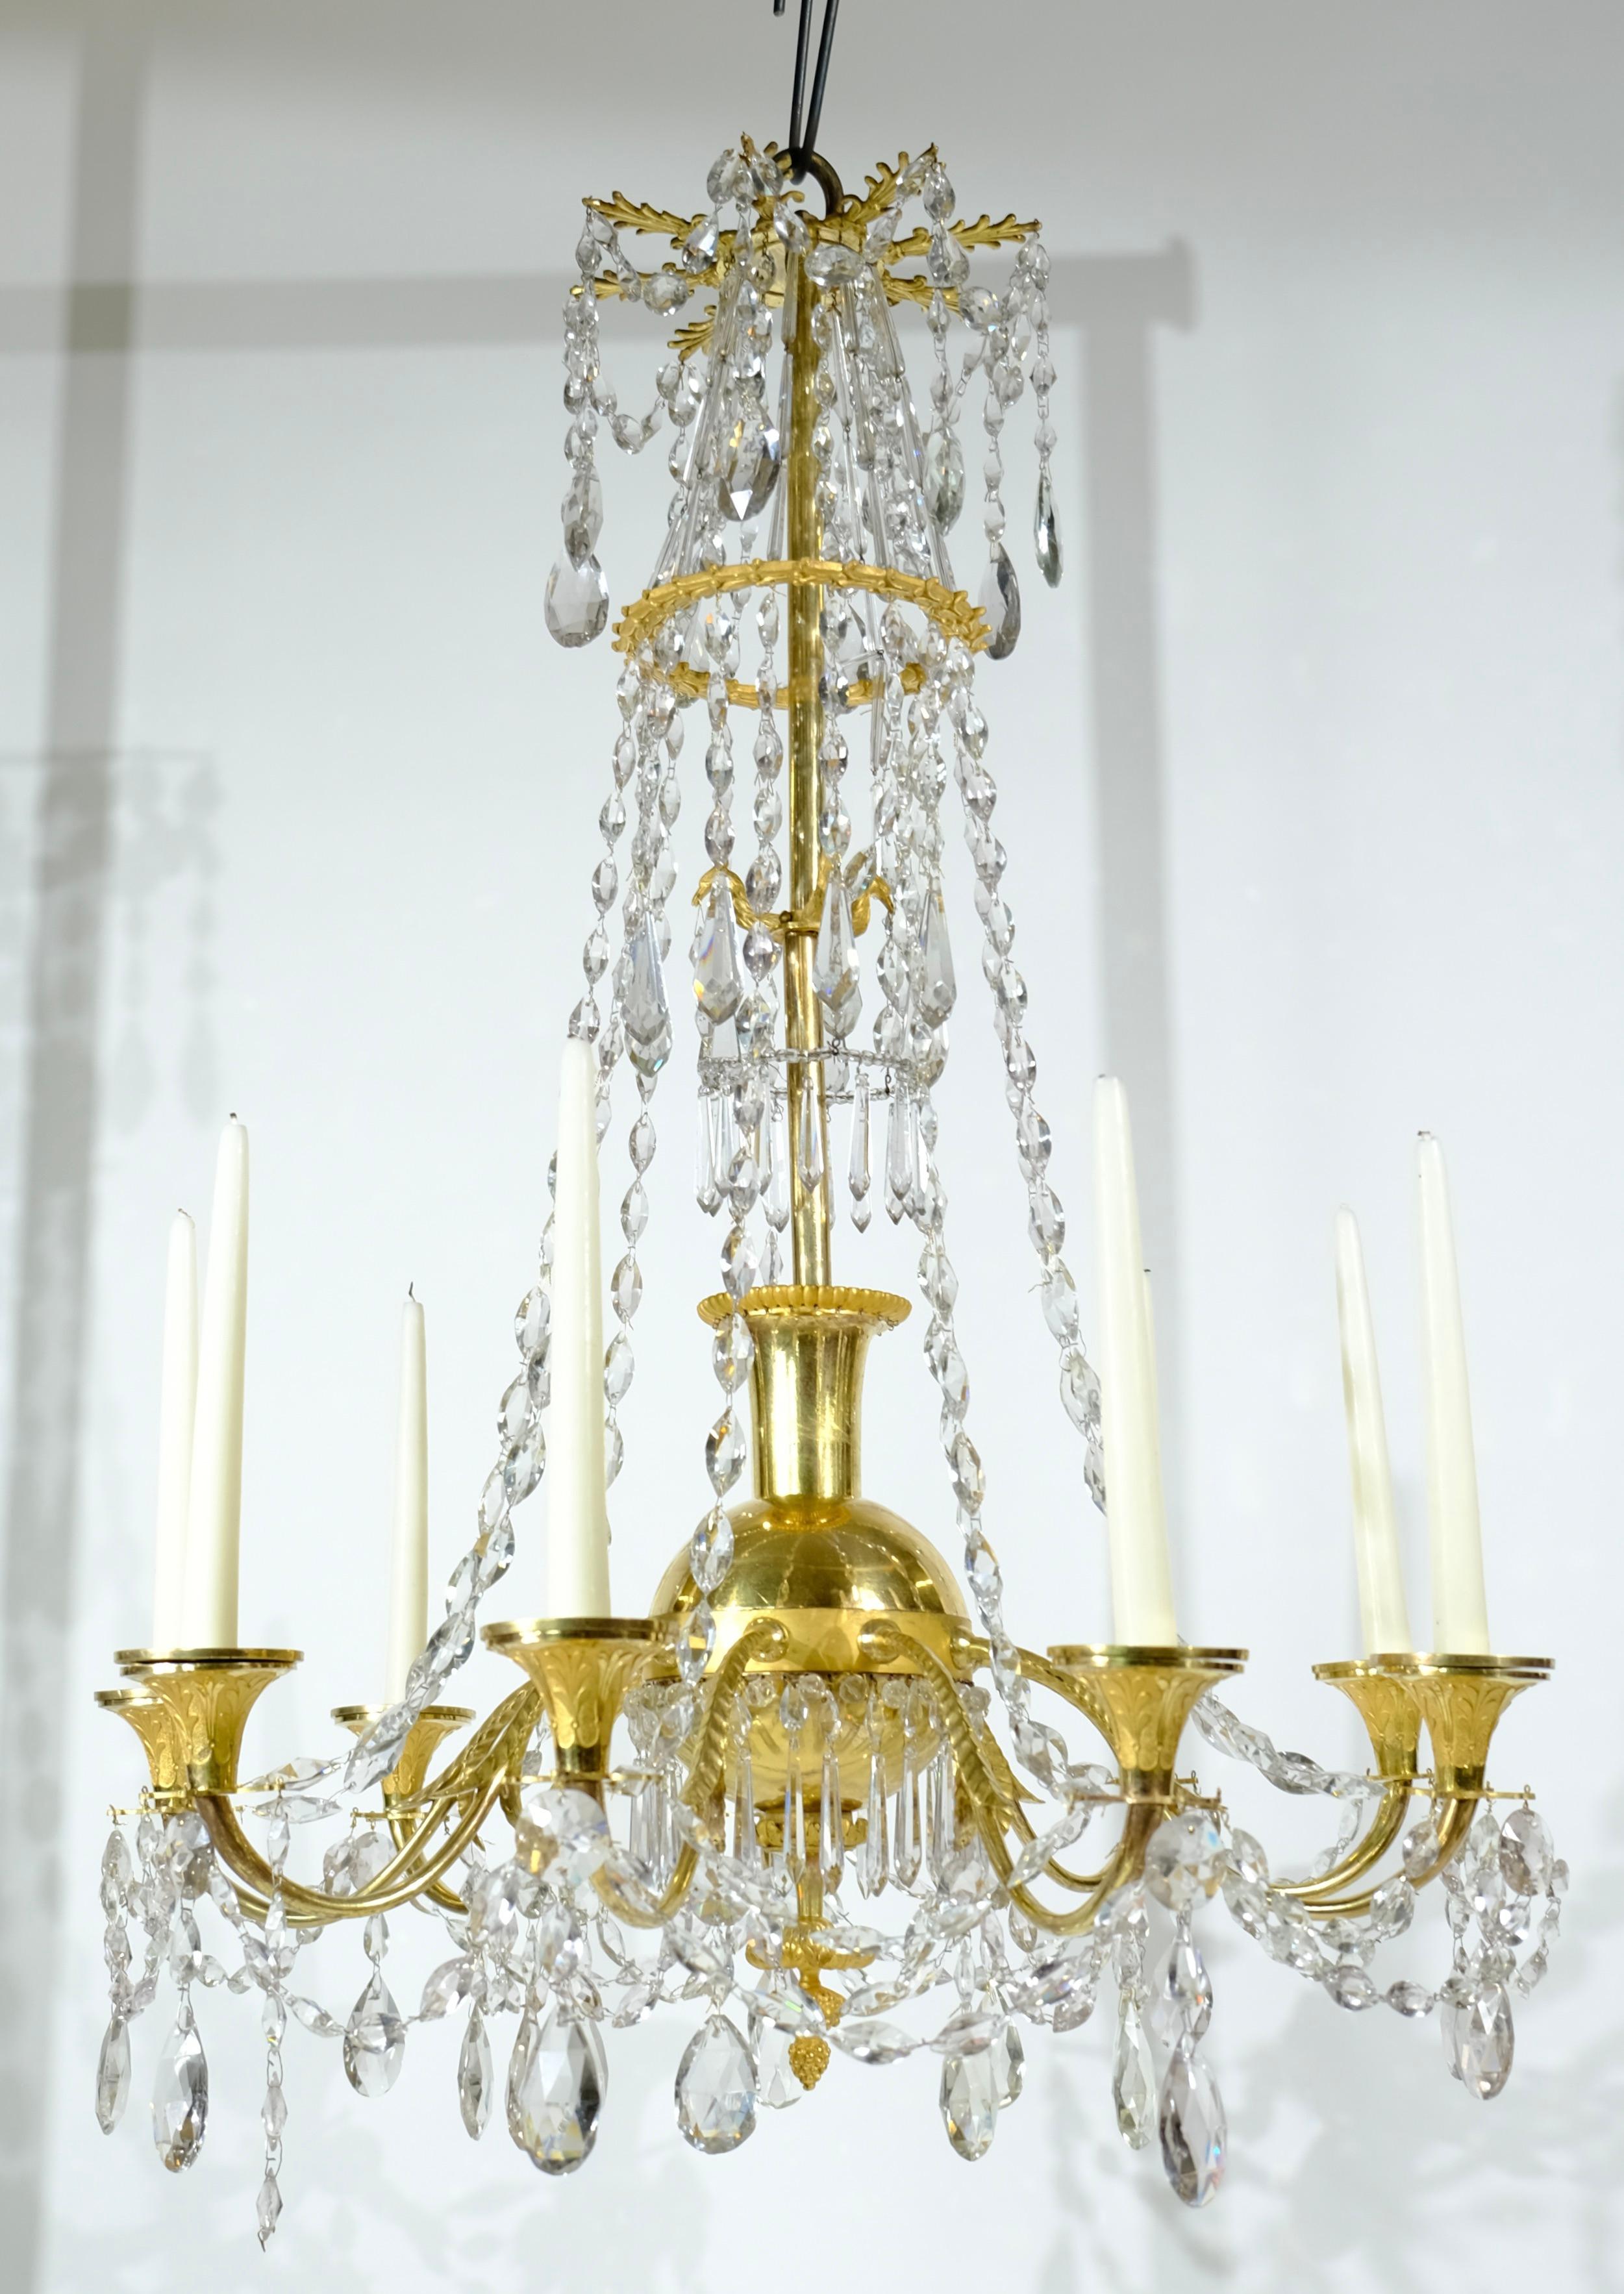 Gilt Antique French chandelier made around year 1800